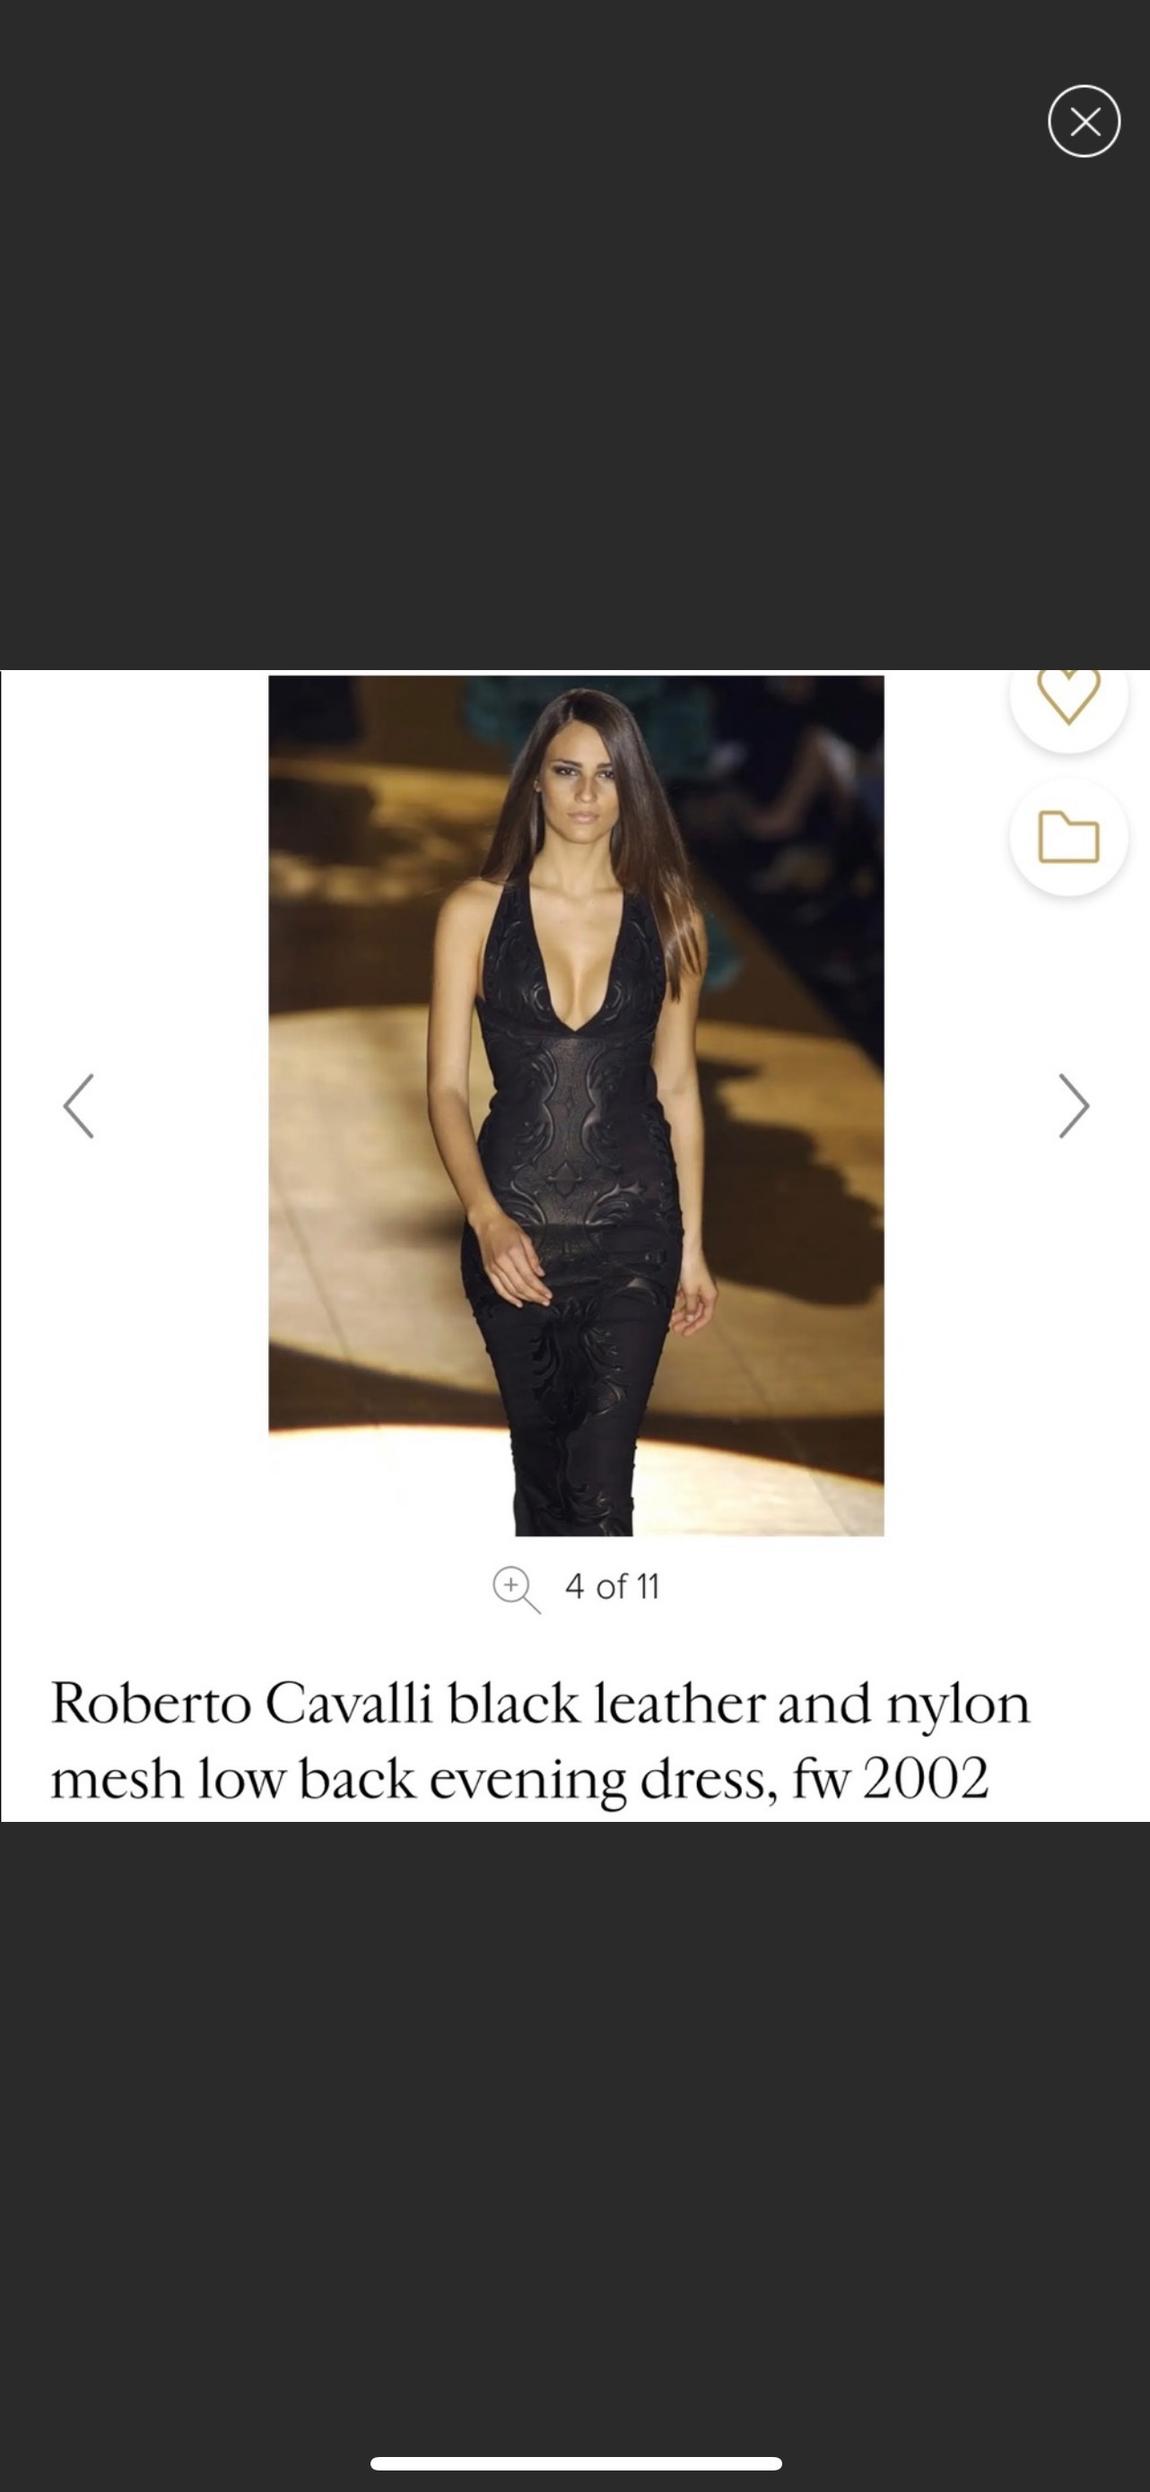 Kim Kardashian flashes flesh in a sheer Roberto Cavalli gown at Met Gala  2015 | Daily Mail Online